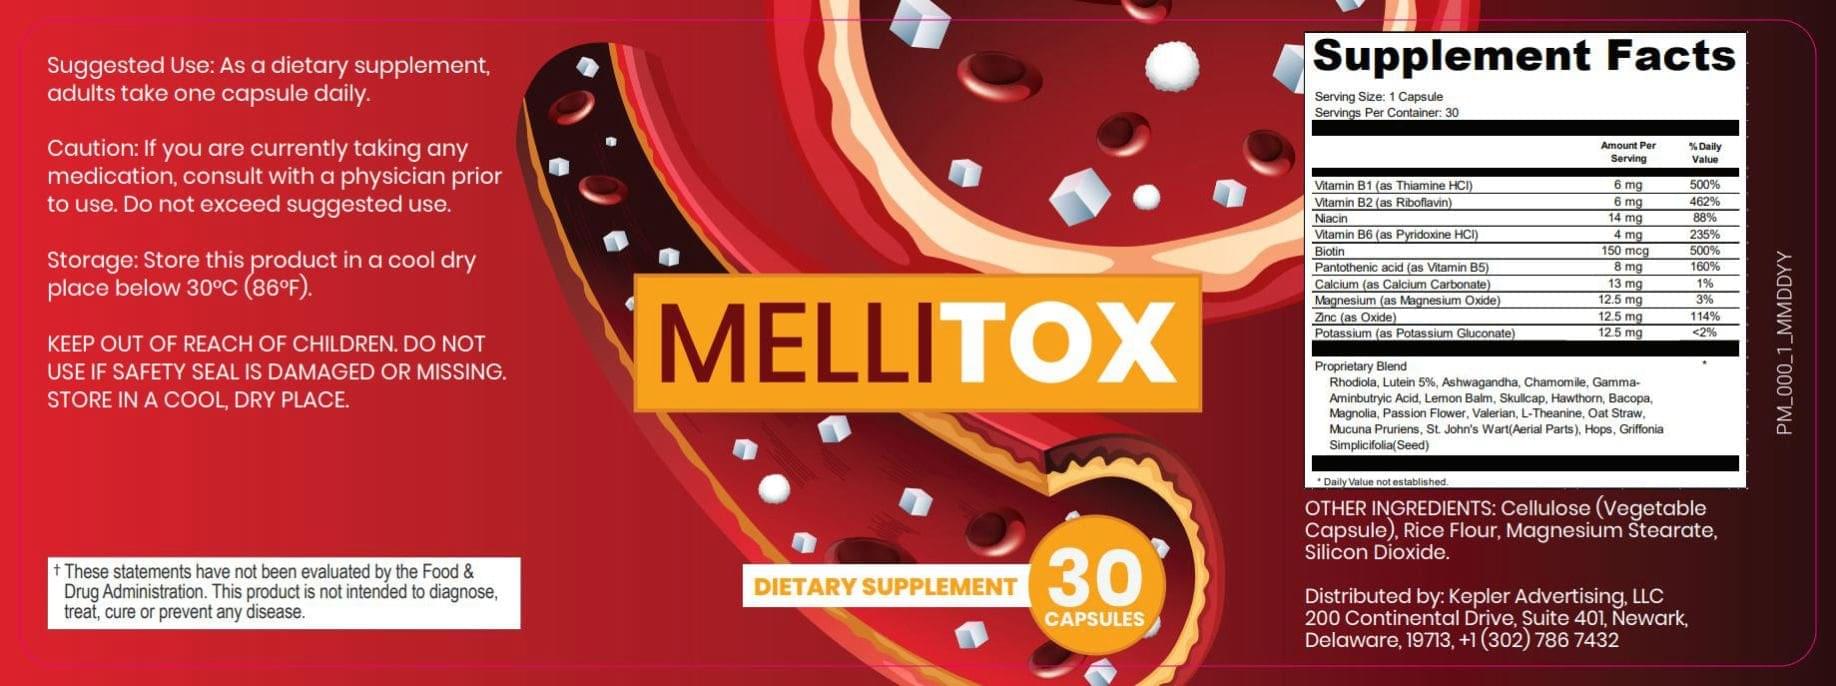 mellitox blood sugar